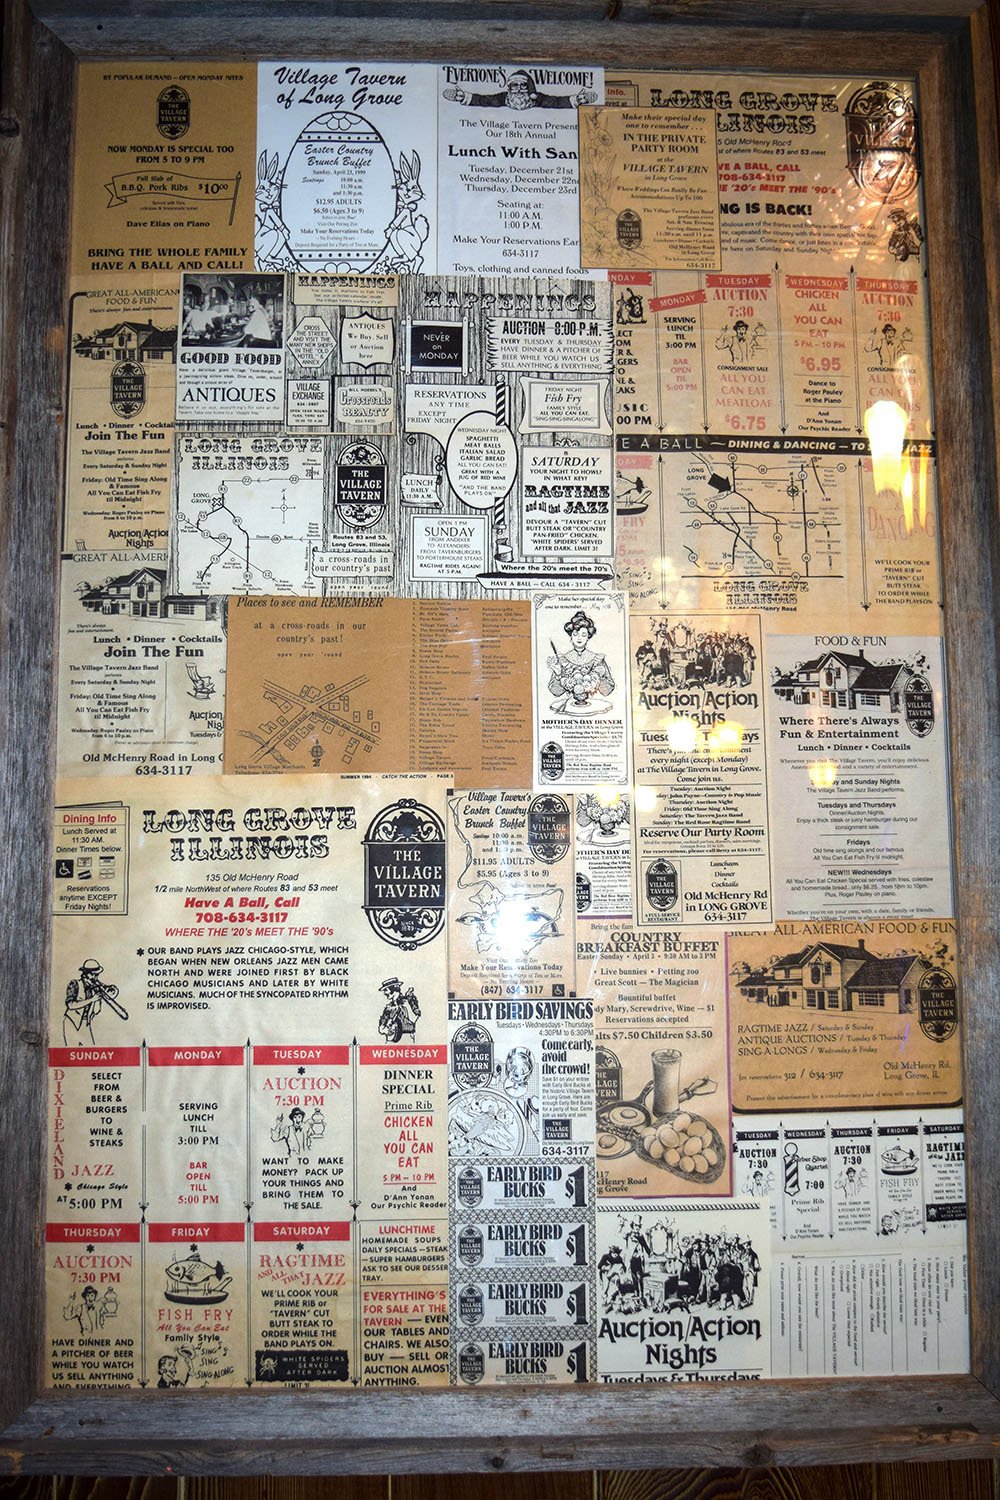 Old menus on display at The Village Tavern